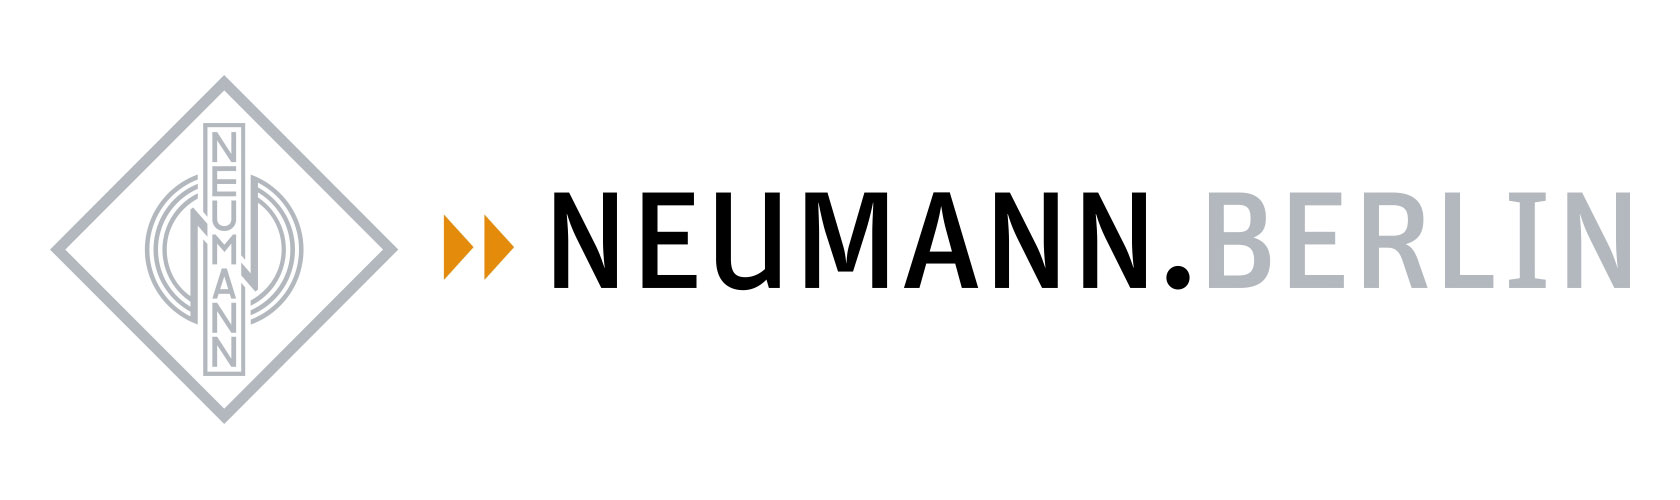 NeumannBerlin_2013_RGB light_BG_page-0001.jpg